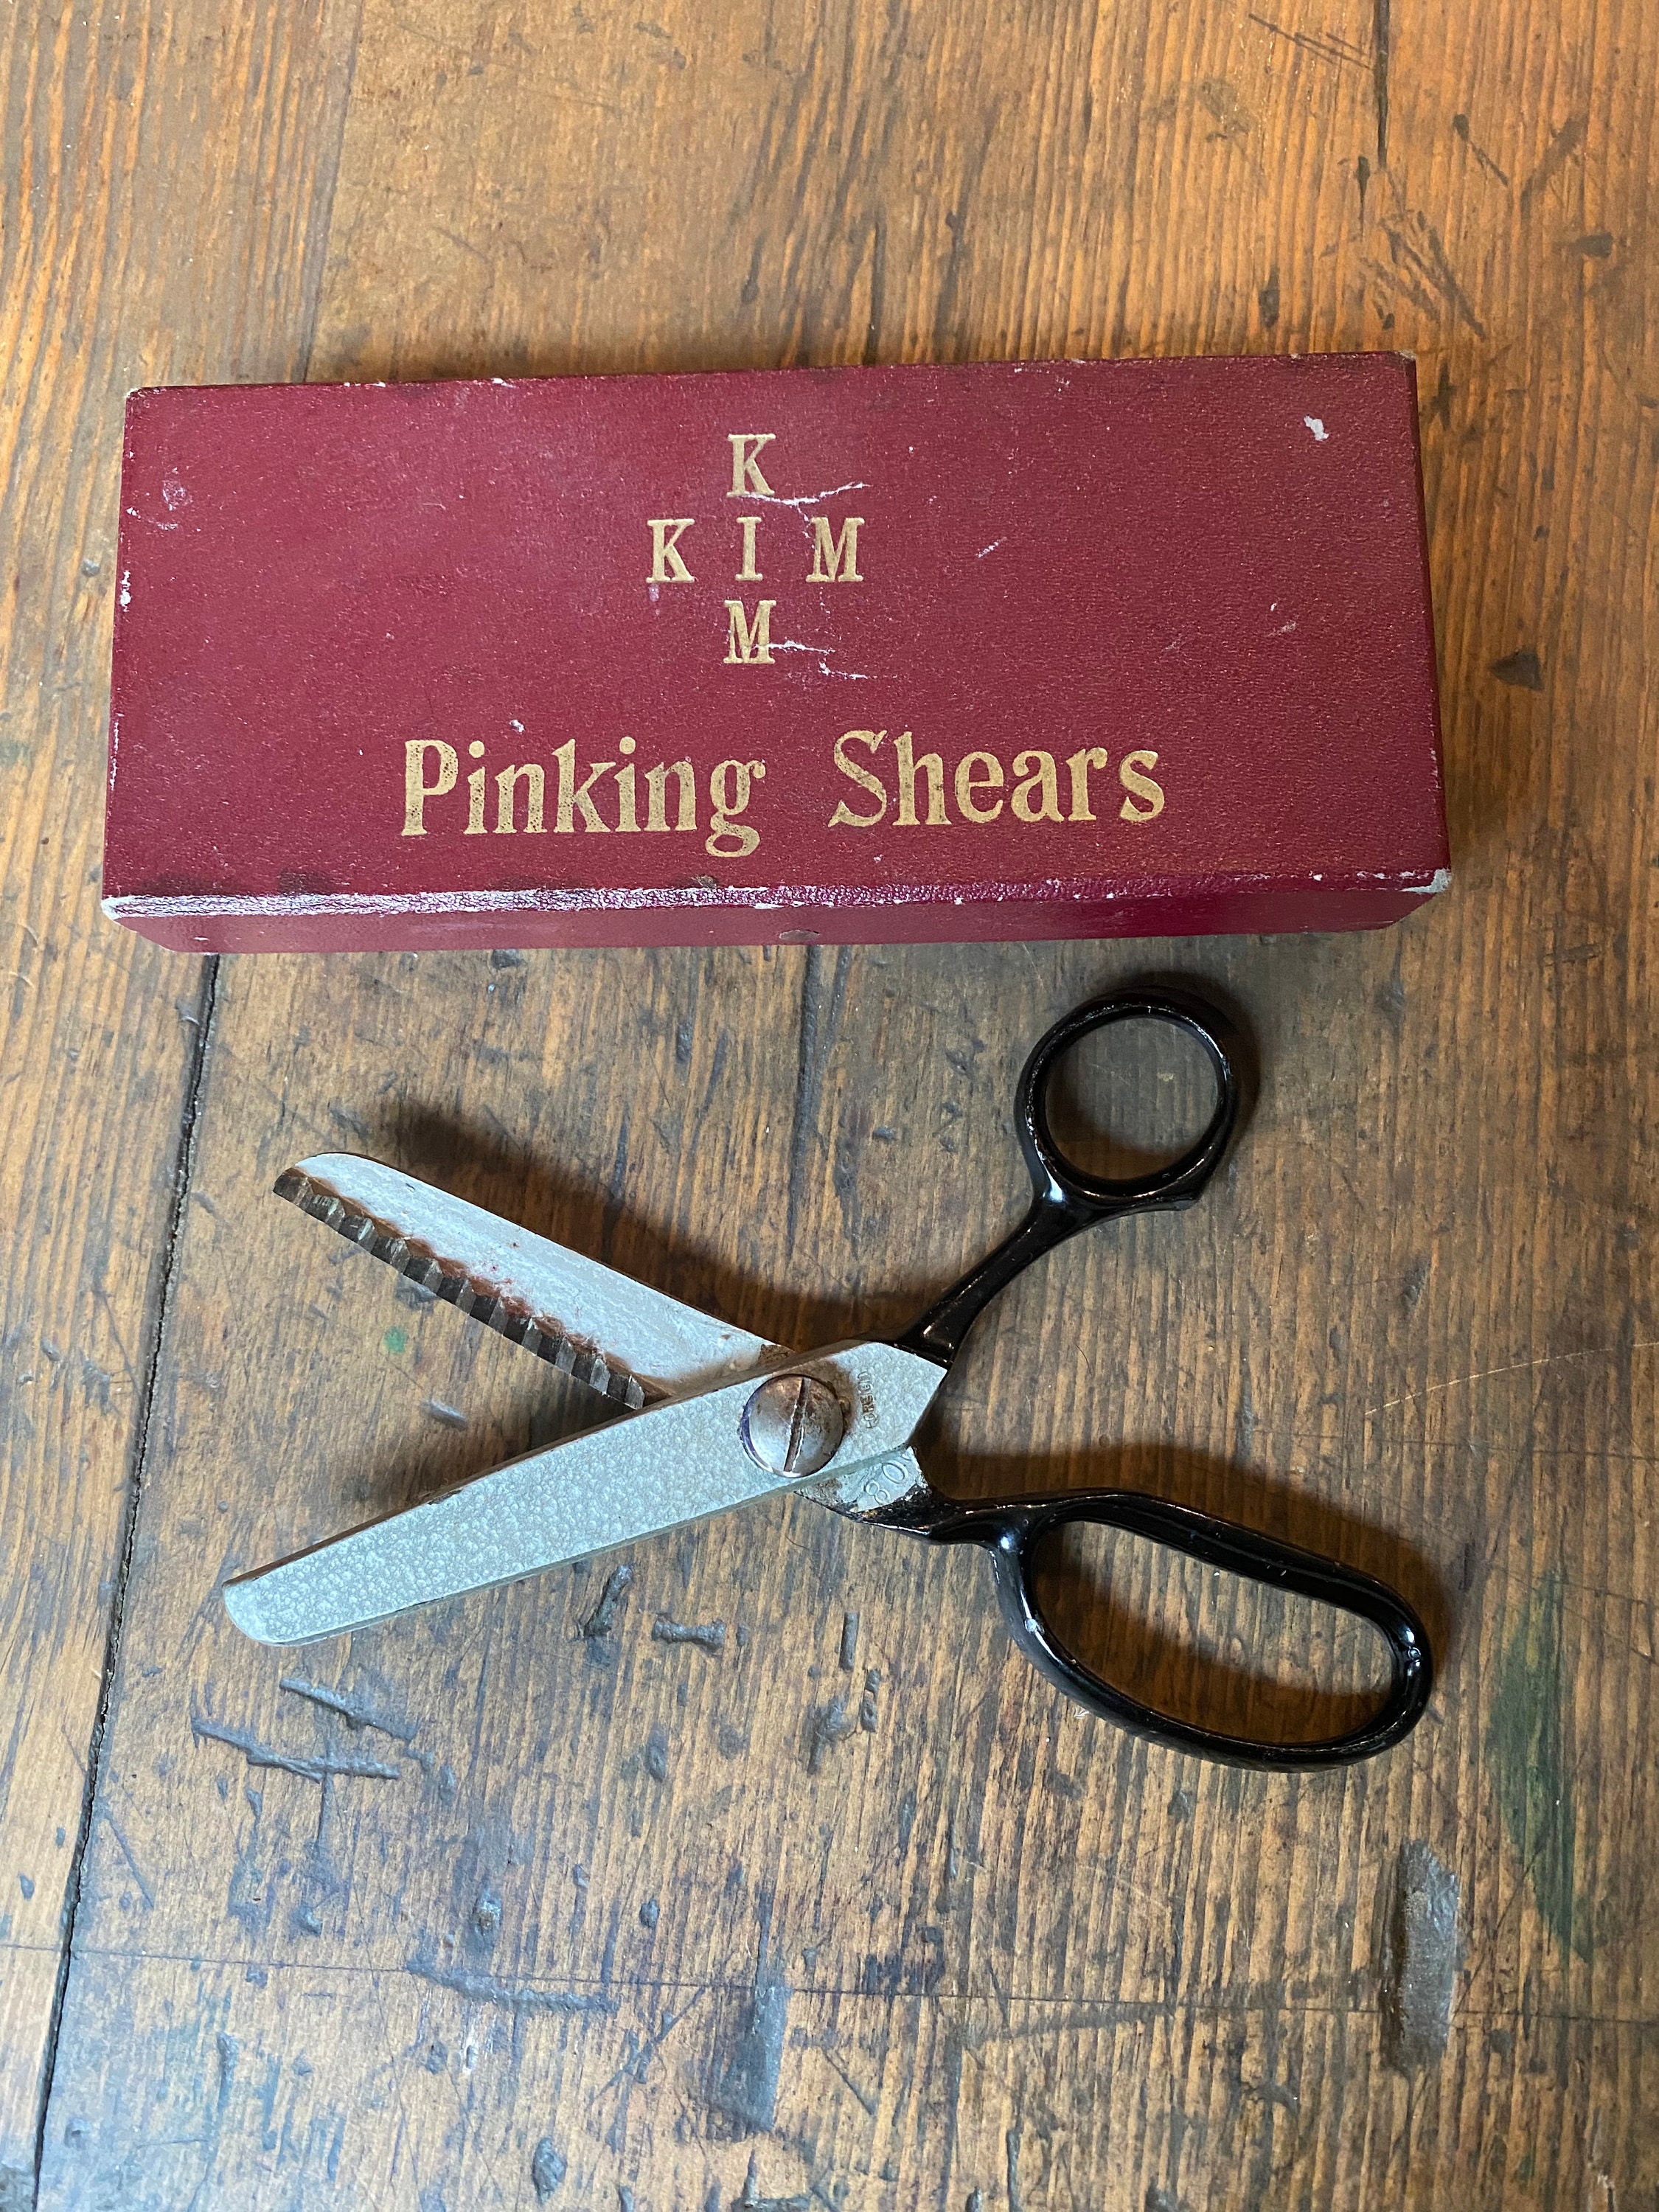 Vintage Scissors Rusty Pinking Shears 1950s Rusty Scissors